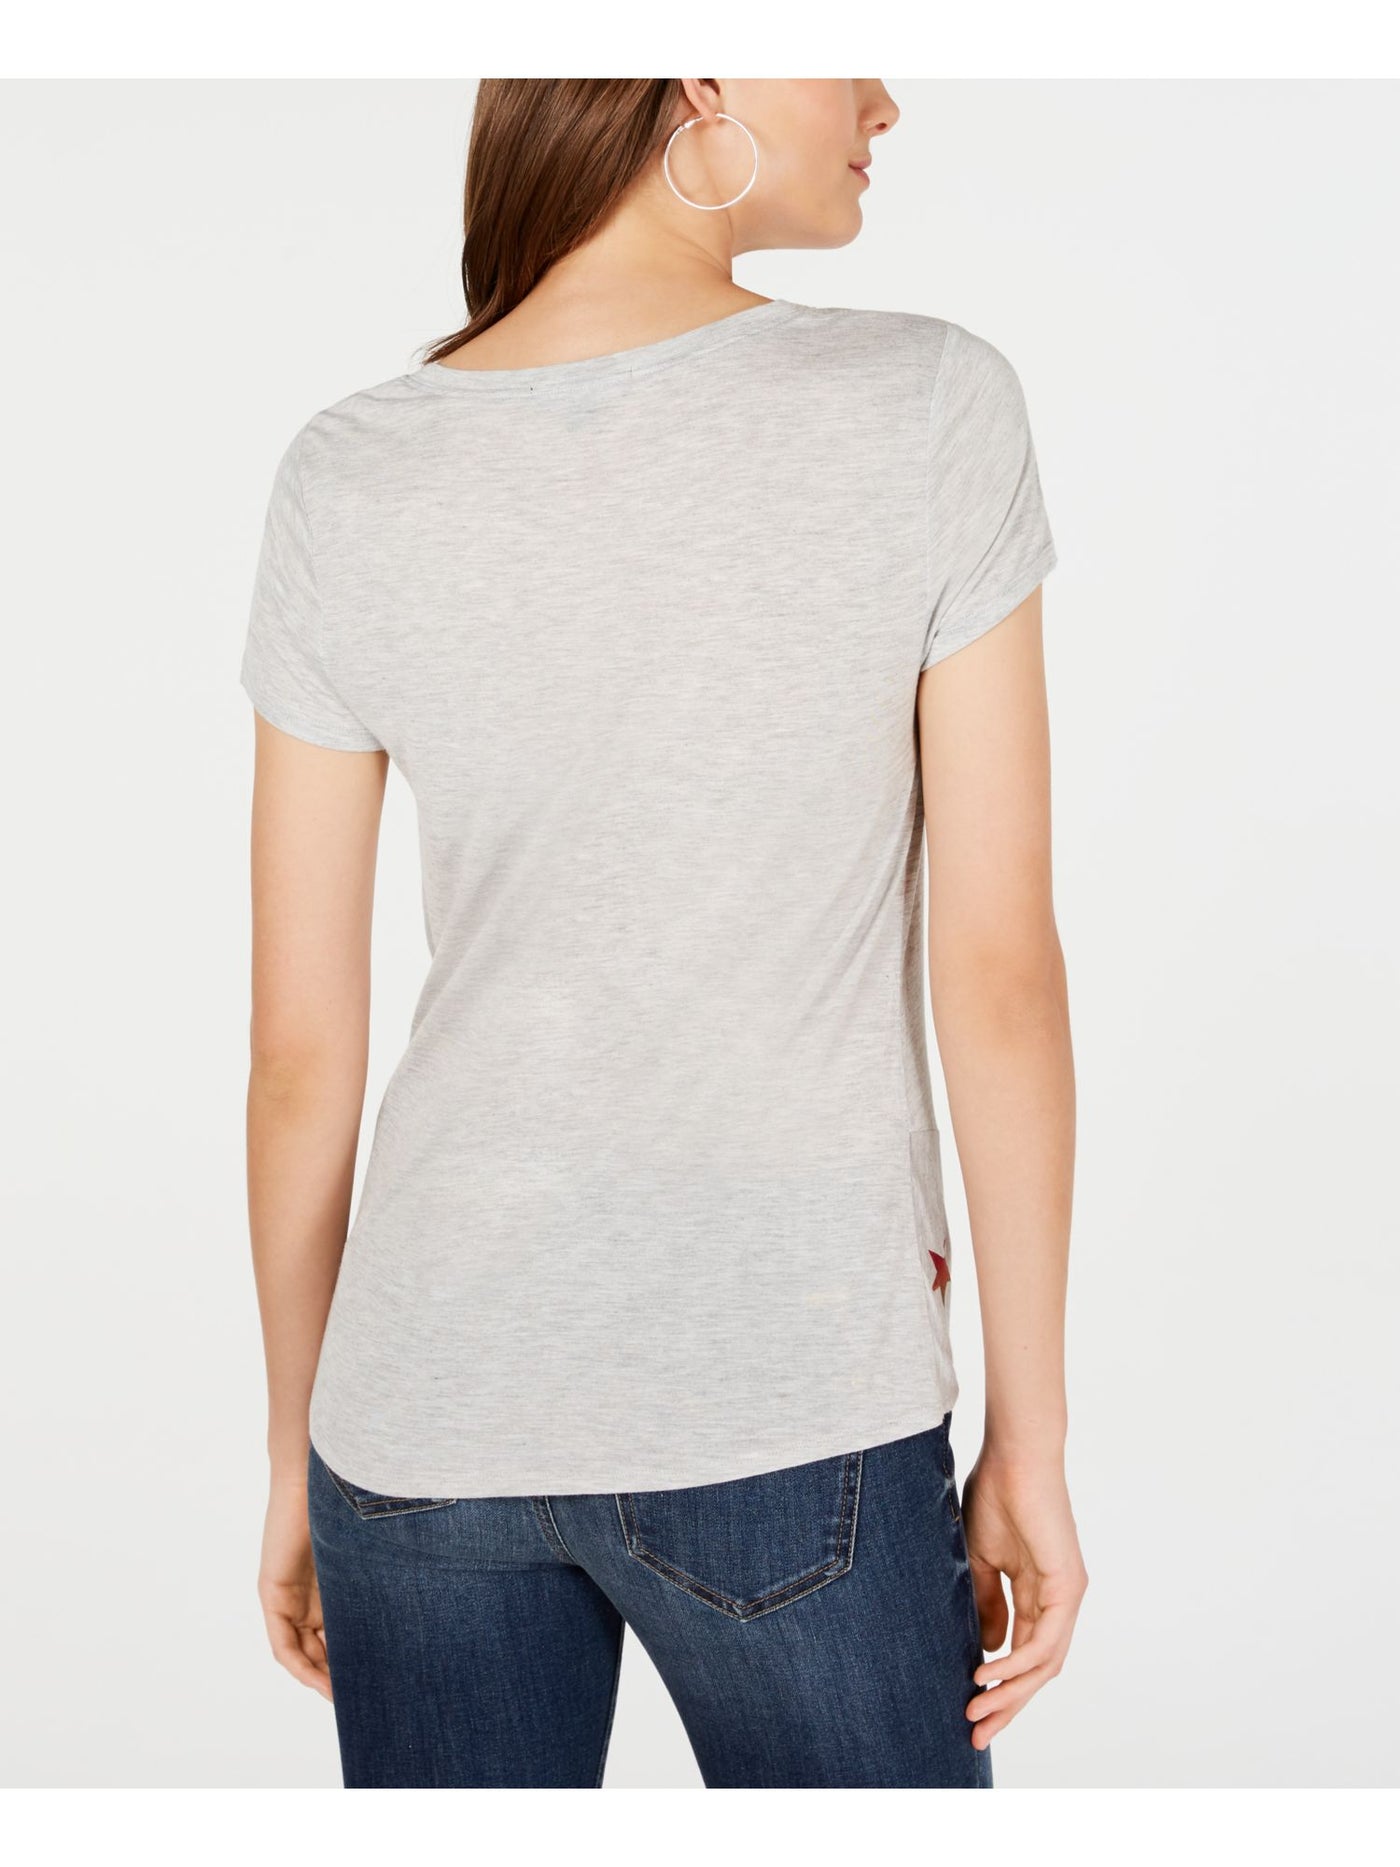 INC Womens Gray Patterned Short Sleeve Jewel Neck T-Shirt S